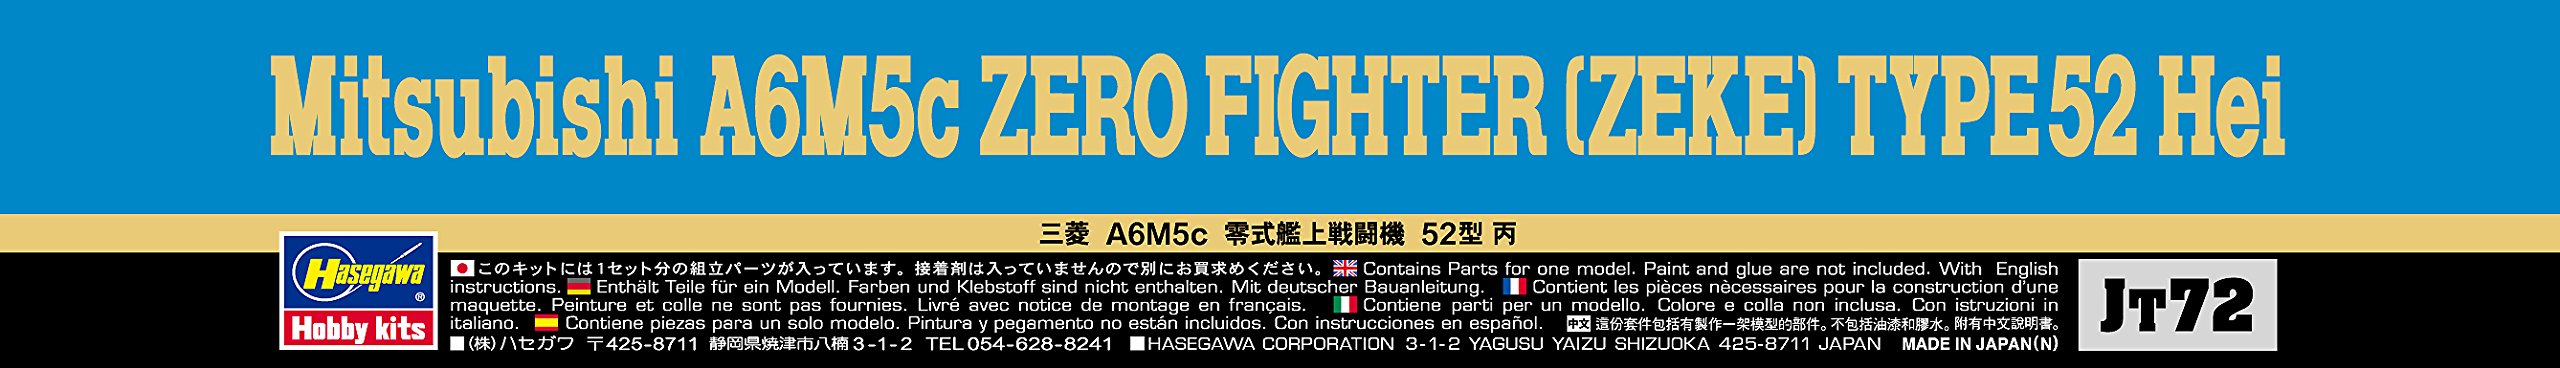 HASEGAWA 1/48 Mitsubishi A6M5C Zero Fighter Zeke Type 52 Hei Modèle en plastique